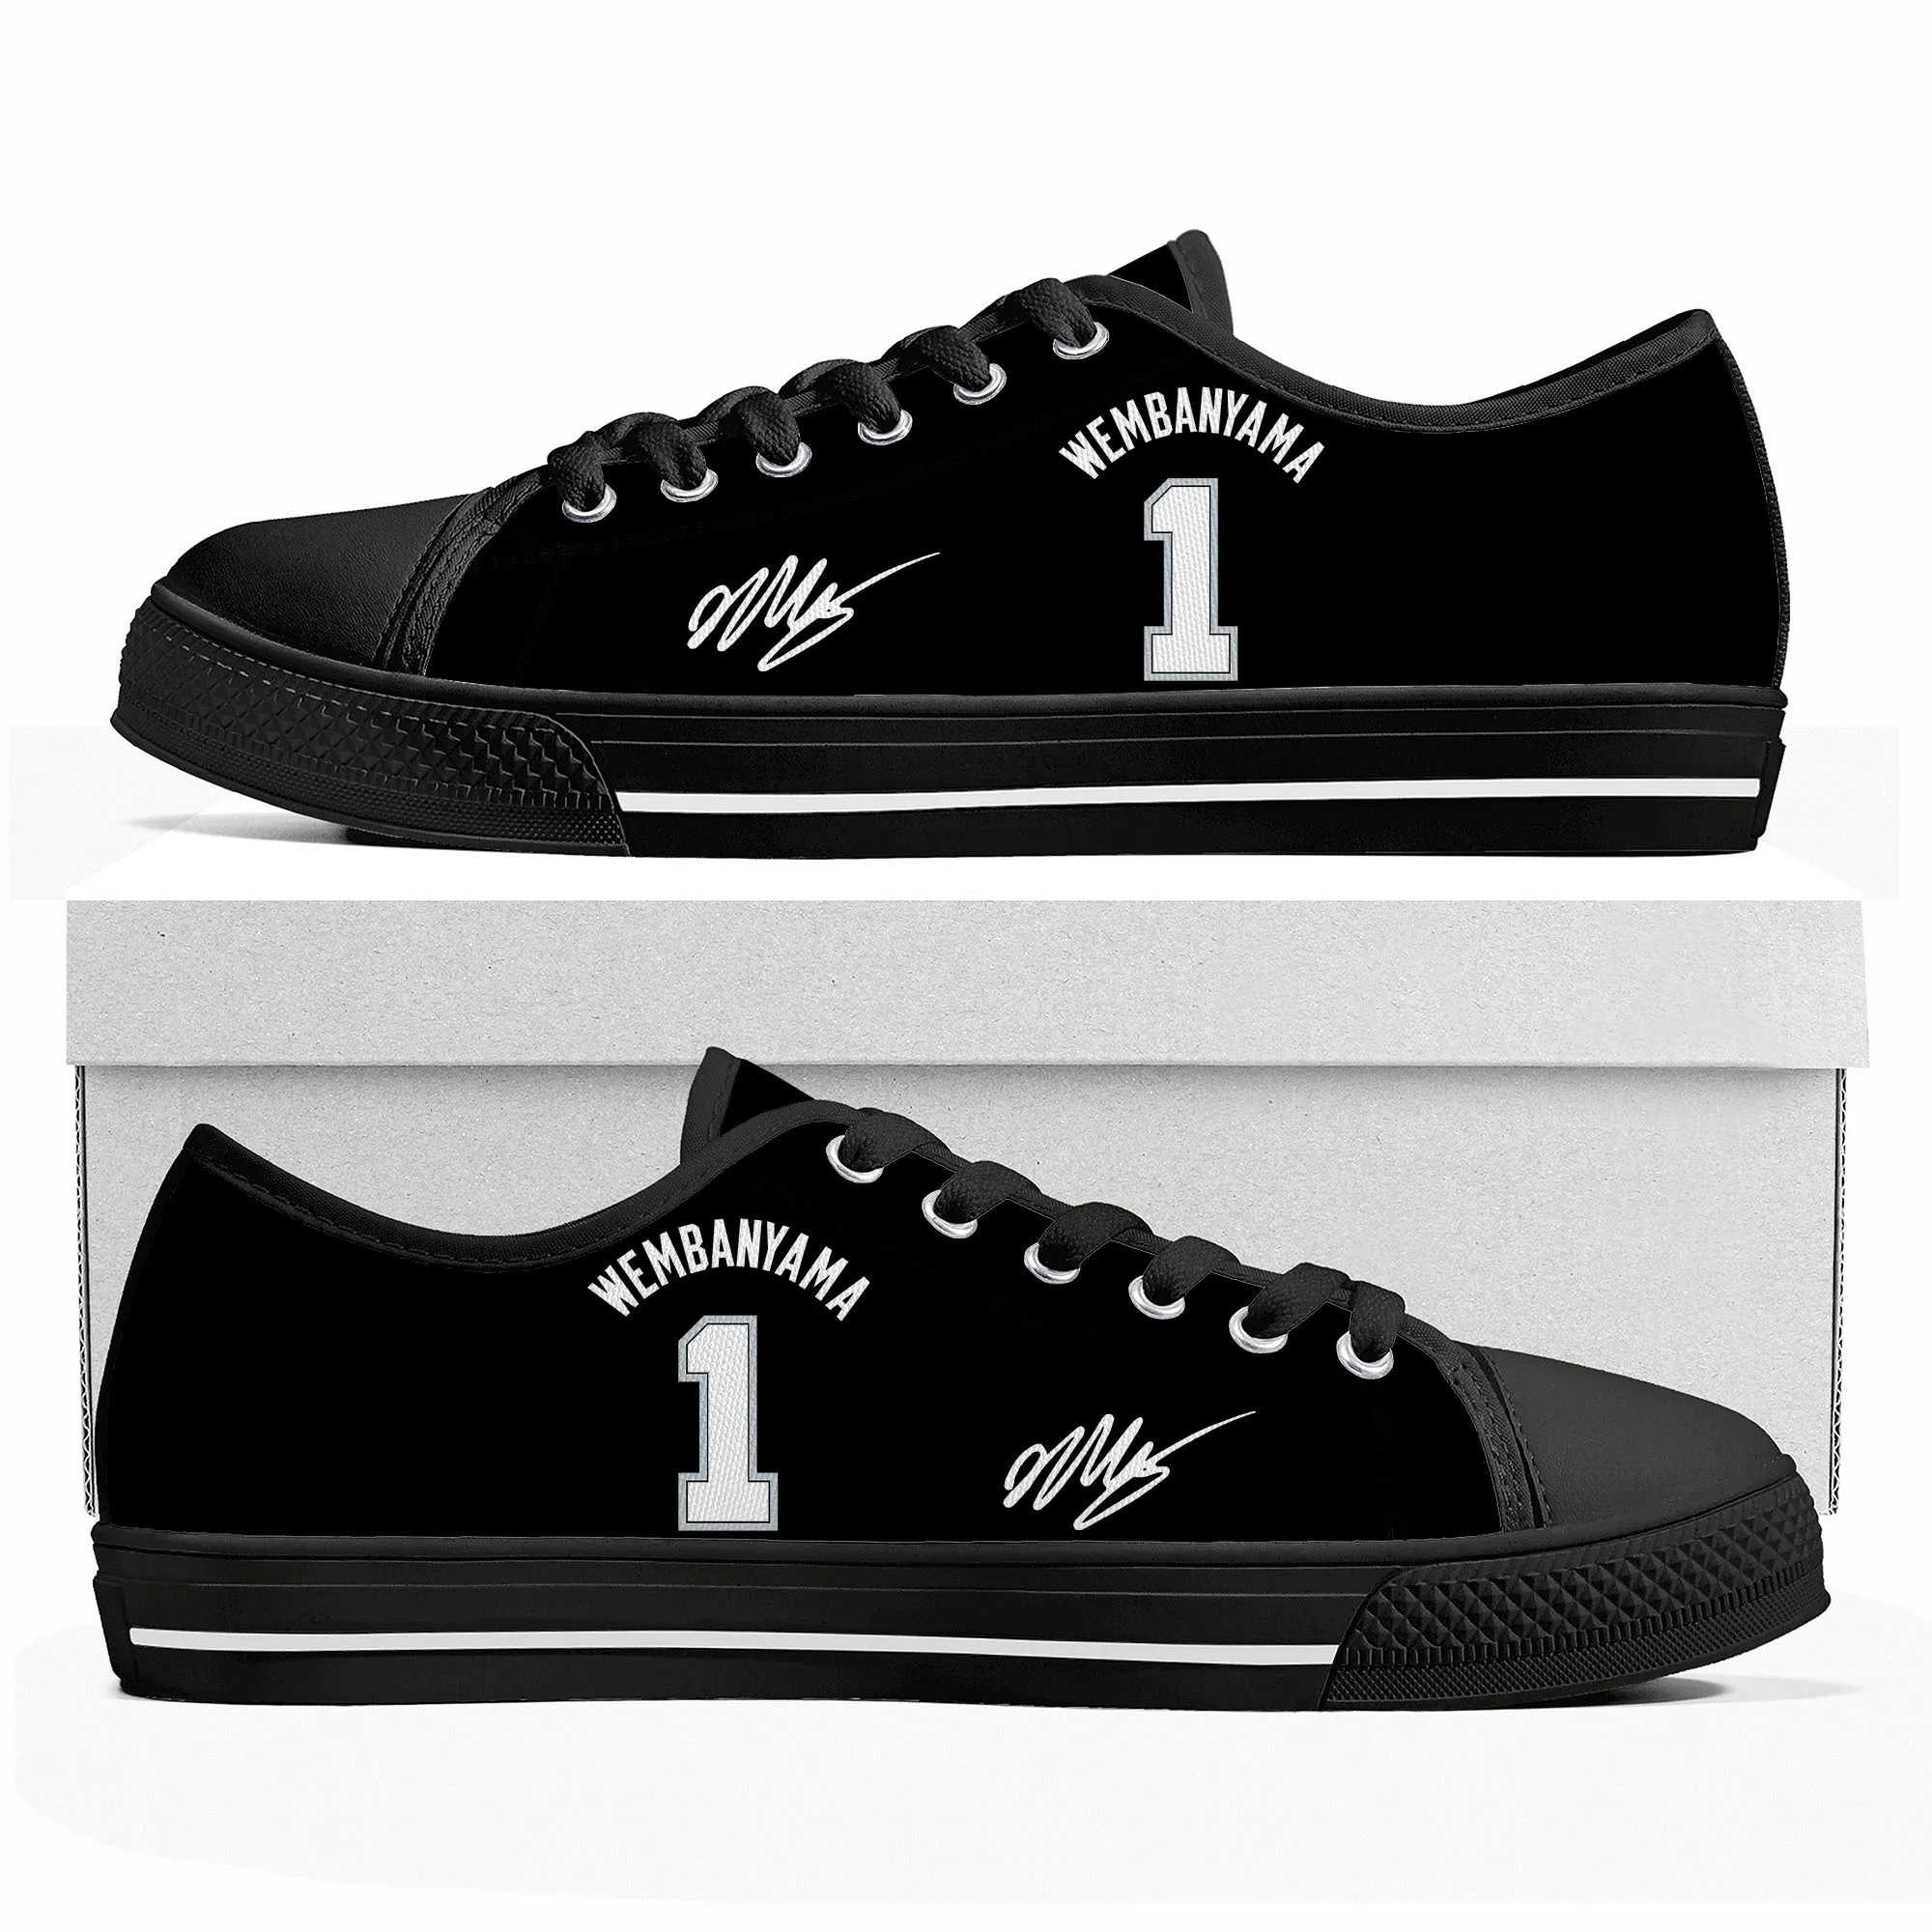 

San Antonio basketball Low Top Sneakers Mens Womens Teenager High Quality Wembanyama No 1 Canvas Sneaker Shoes Custom made Shoe